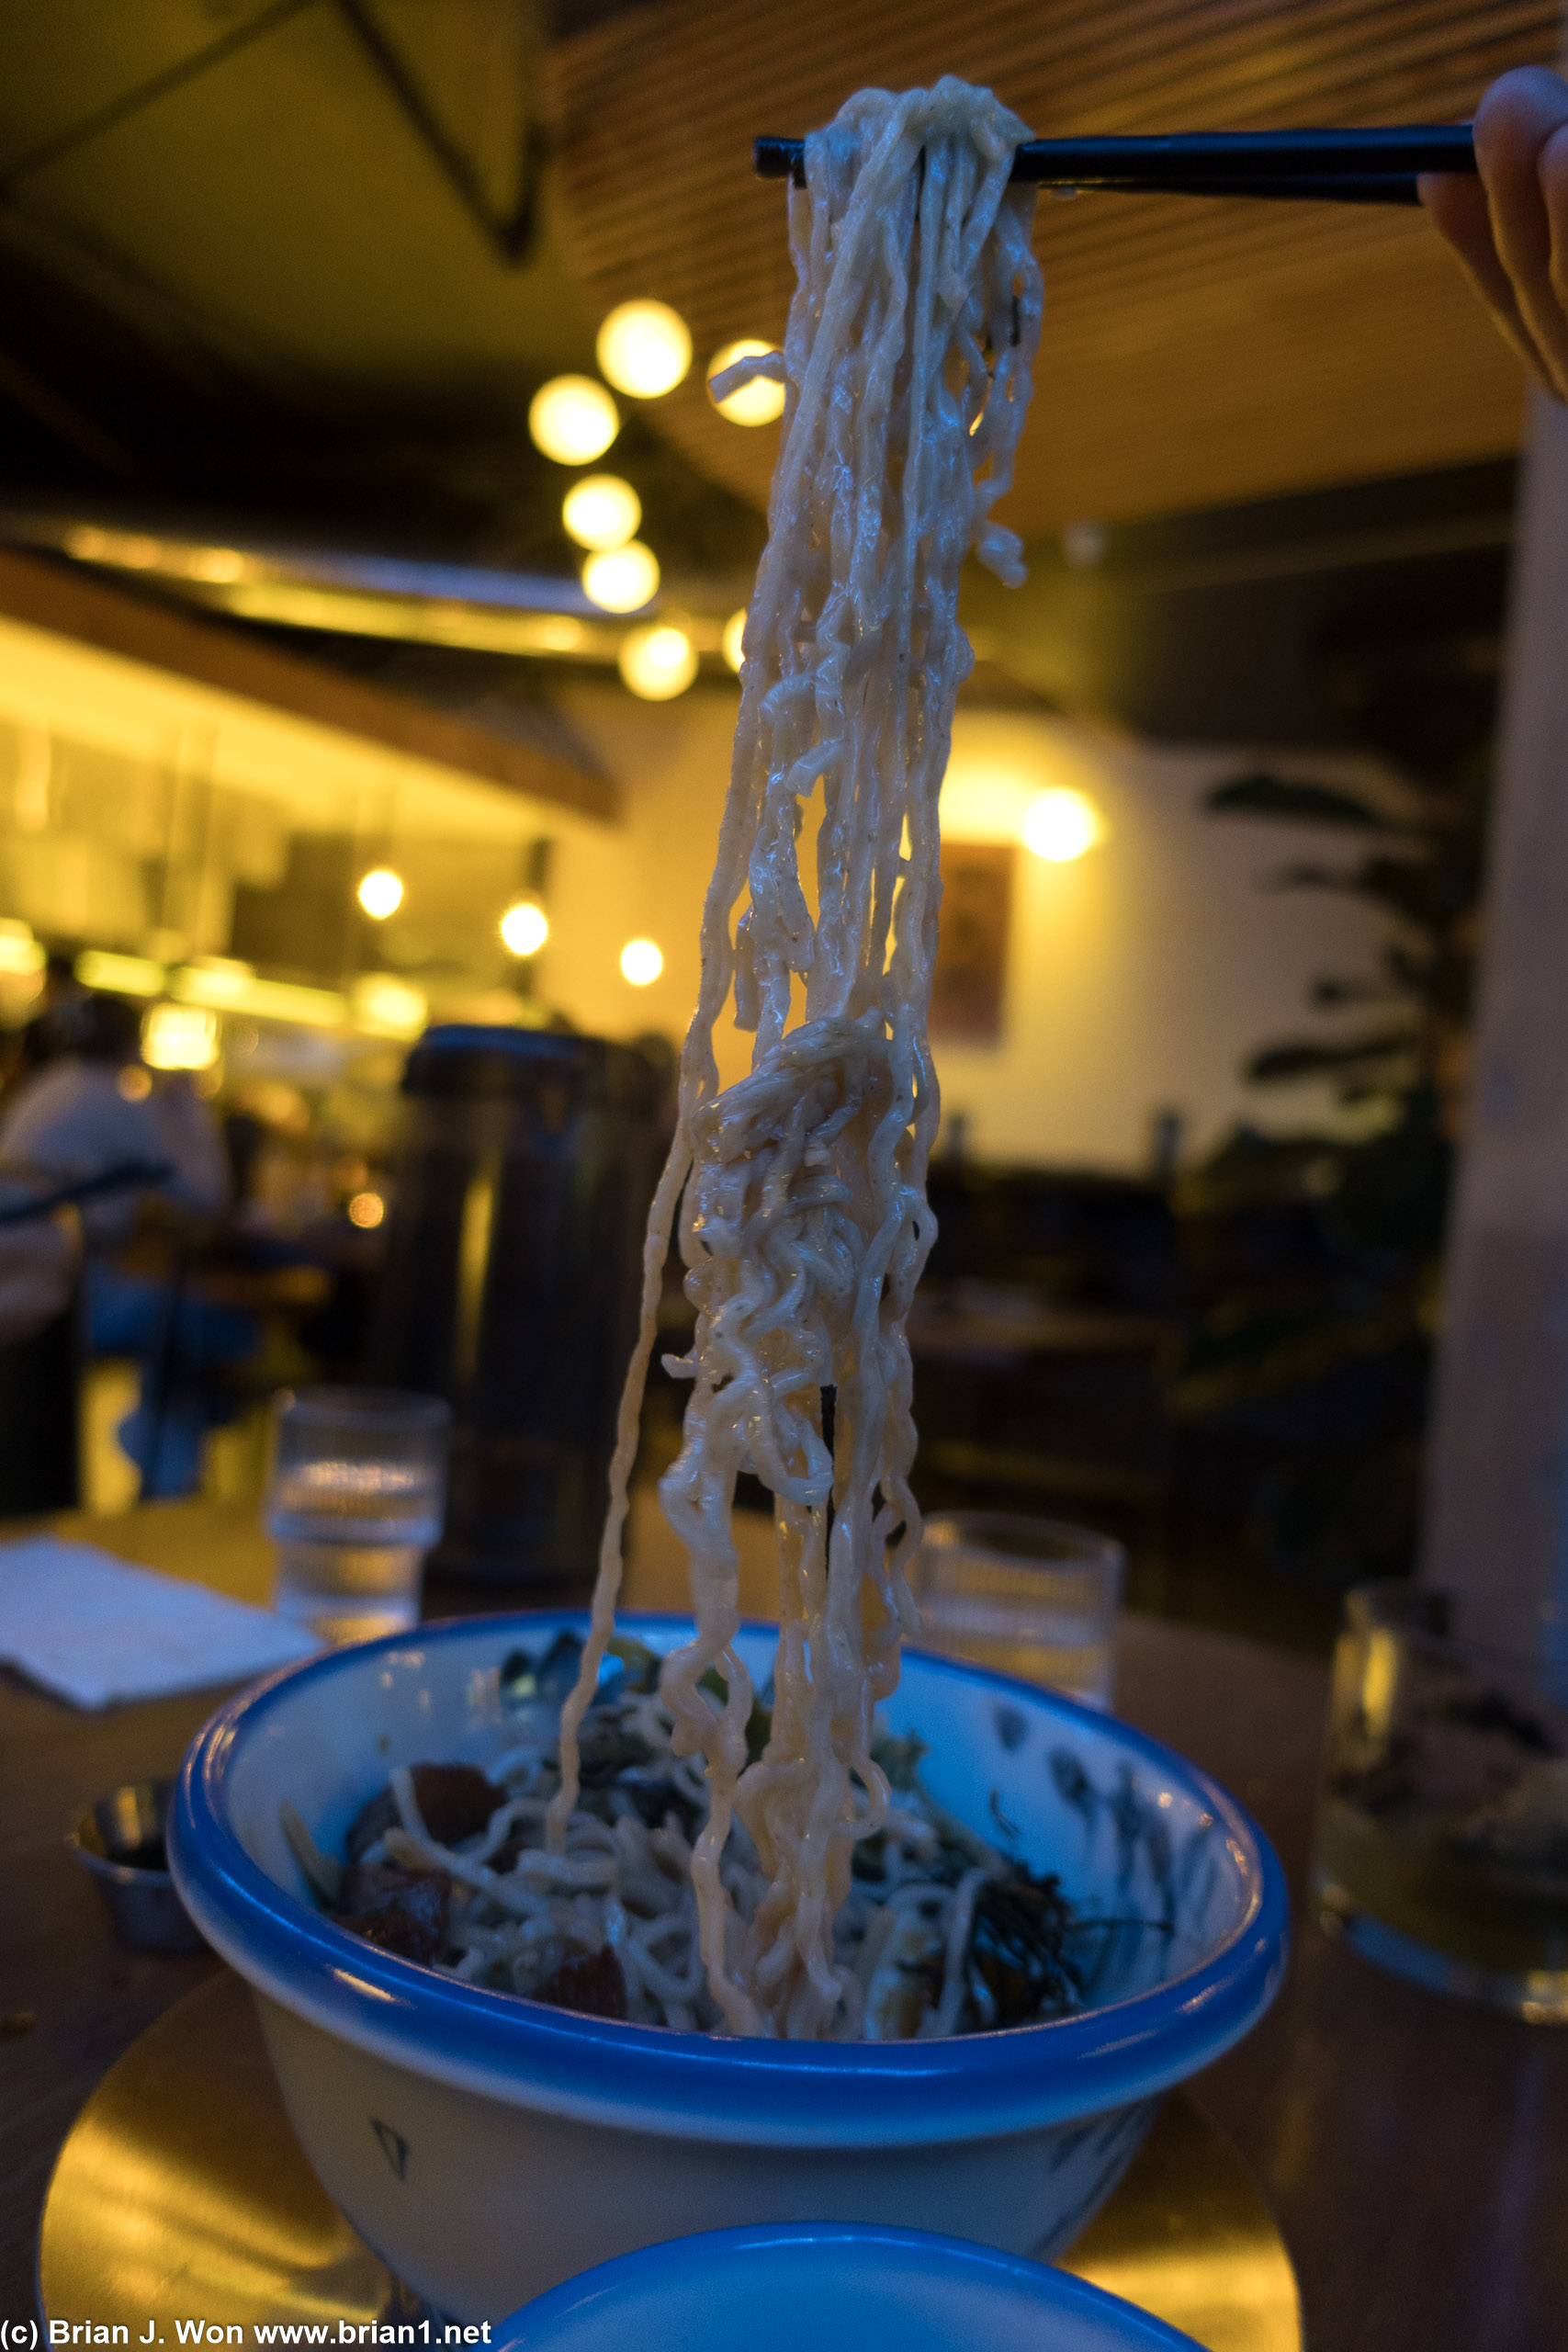 Proof of clumpy noodles.